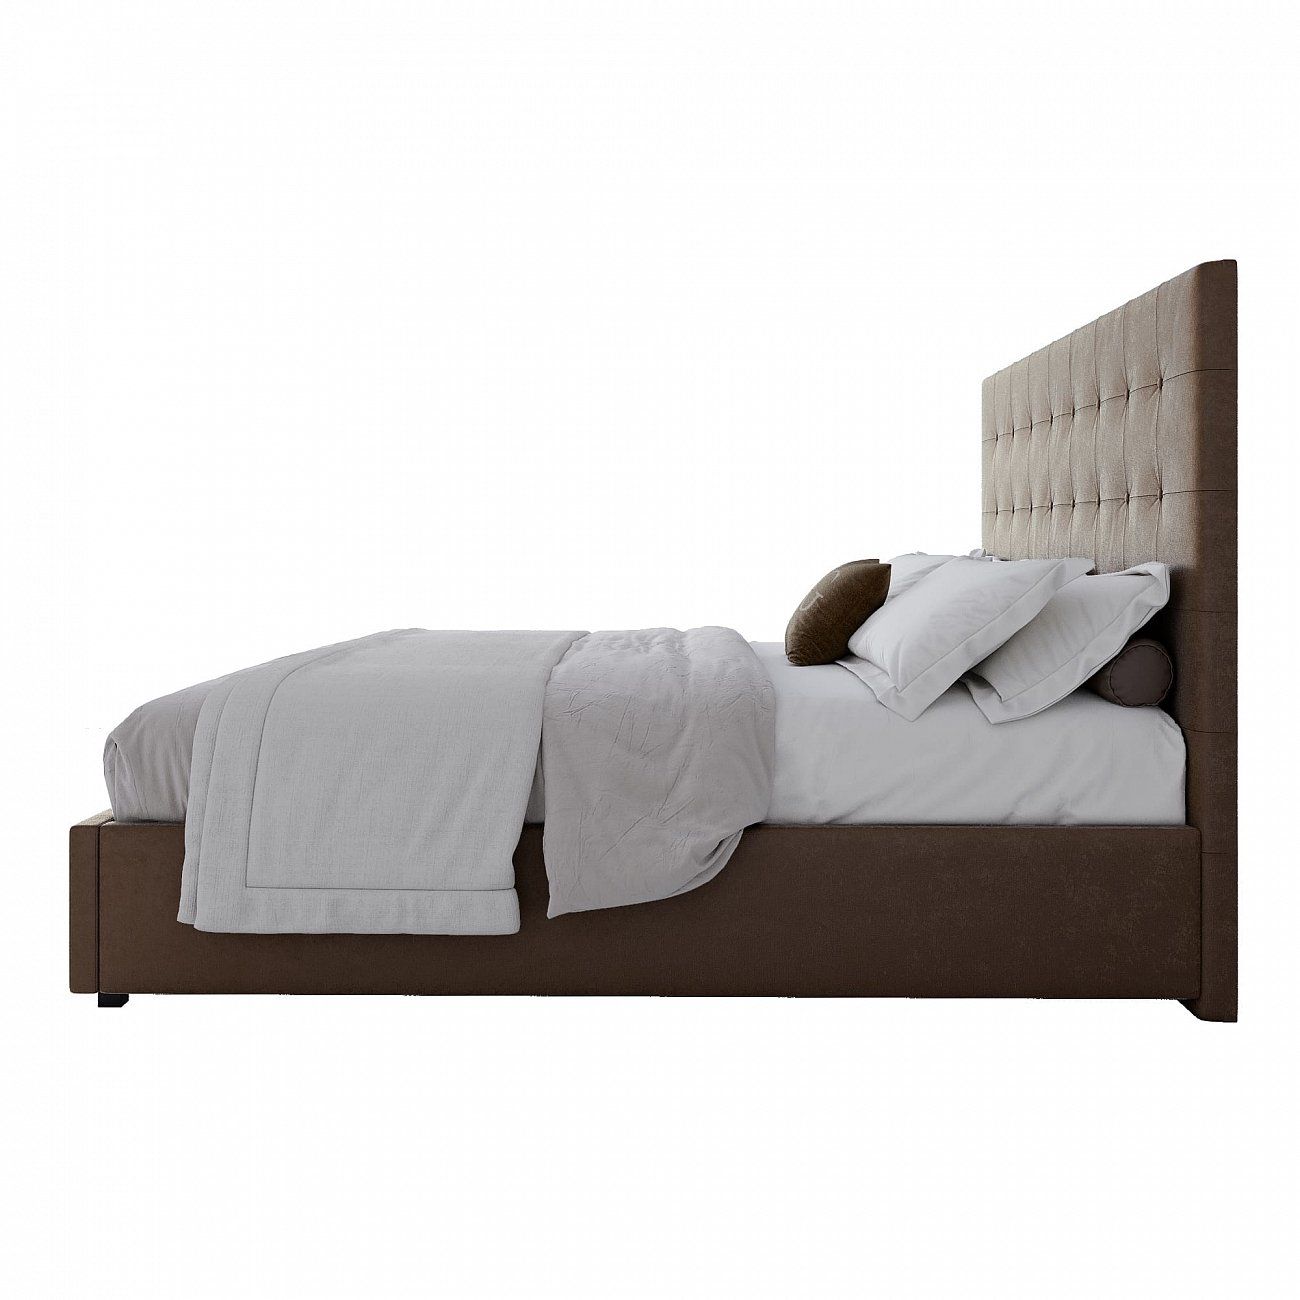 Double bed 180x200 dark brown Royal Black